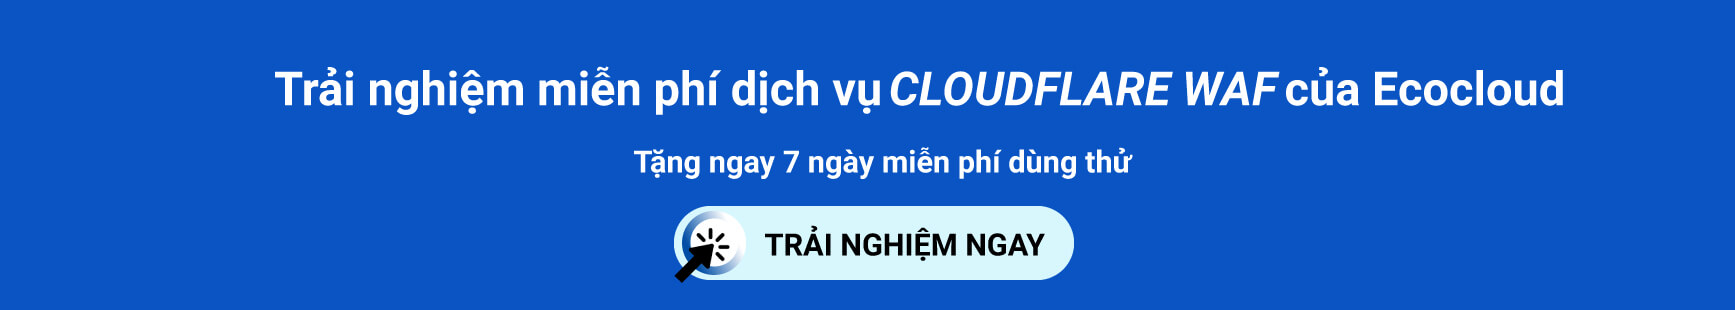 banner-cloudflare-waf